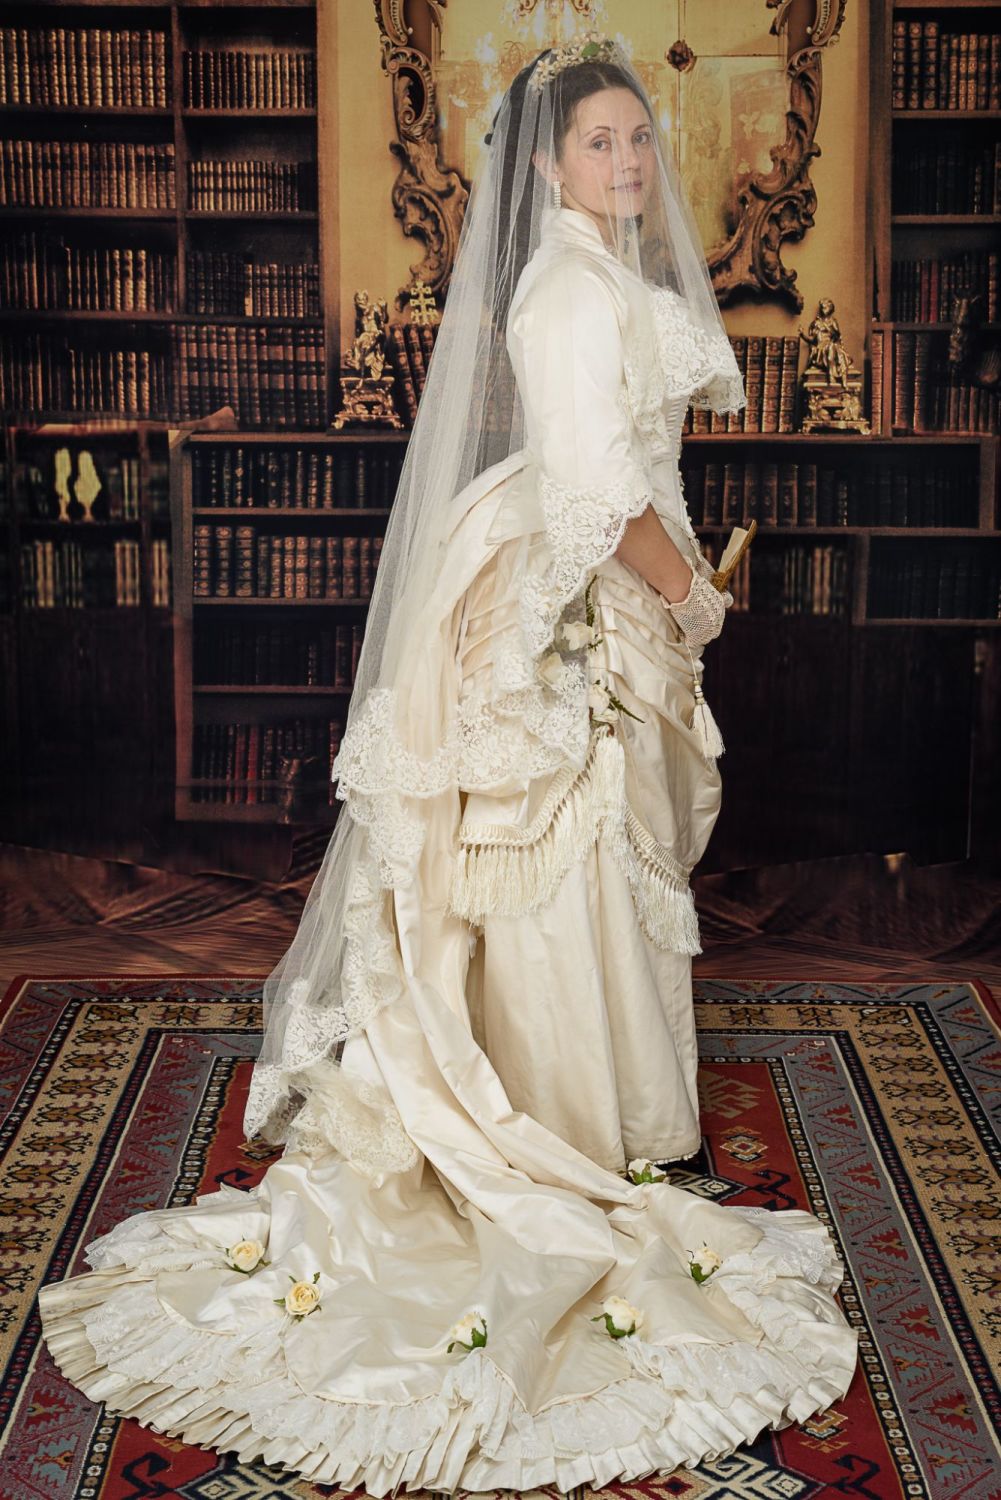 Victorian wedding dress, used